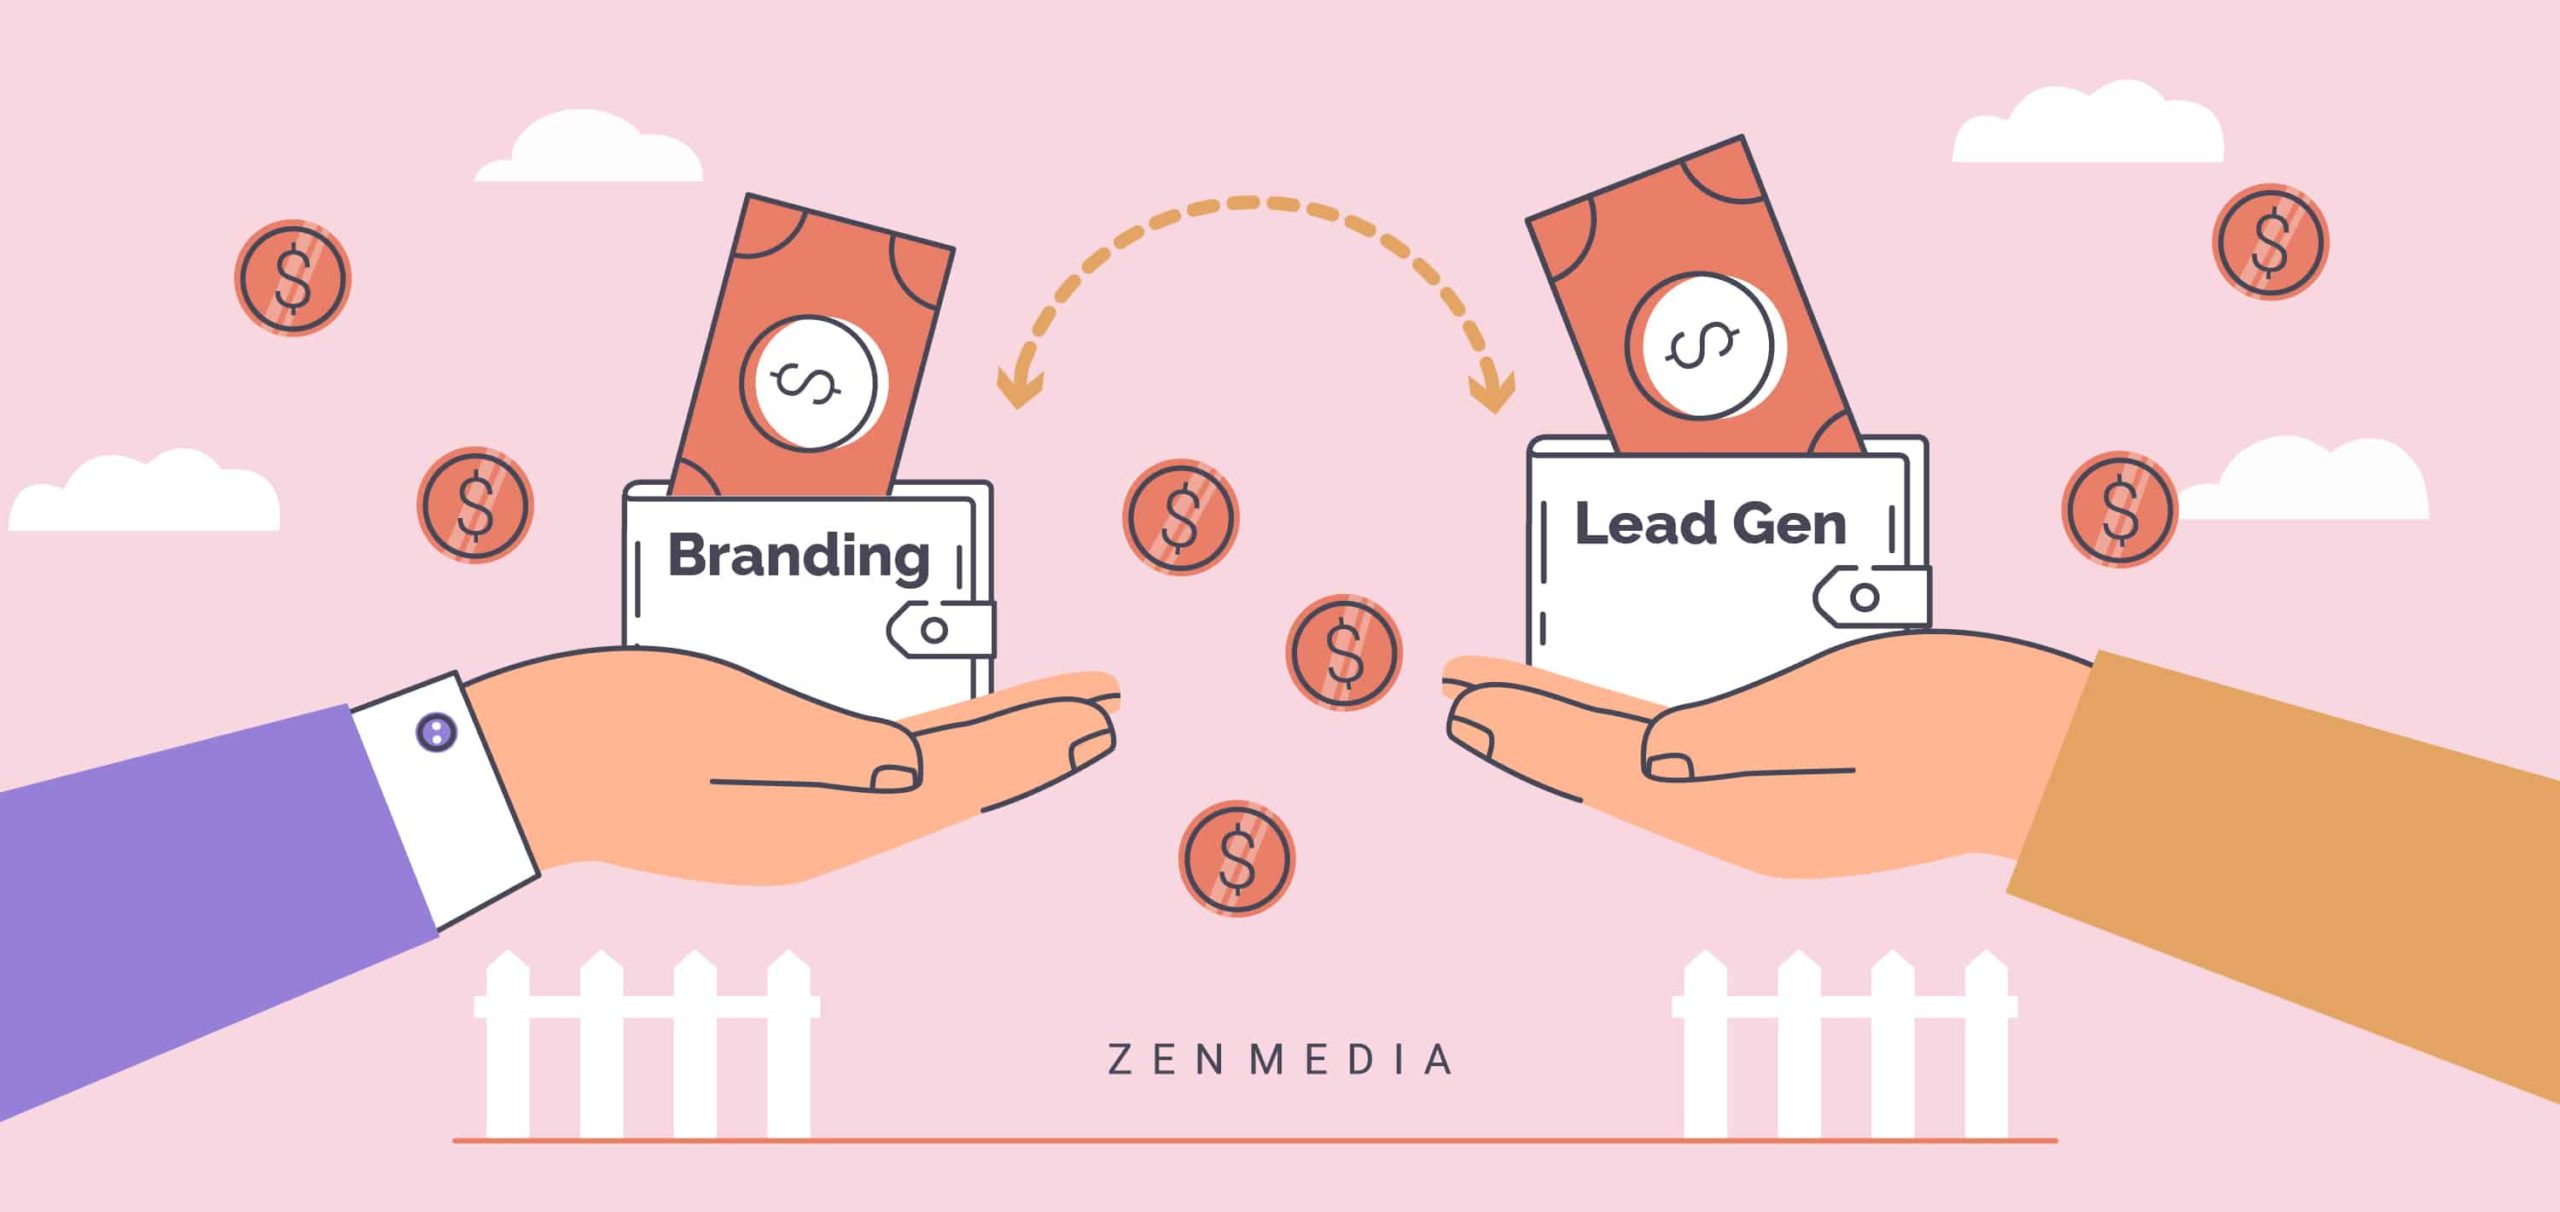 Balance your B2B marketing budgets between branding and lead gen